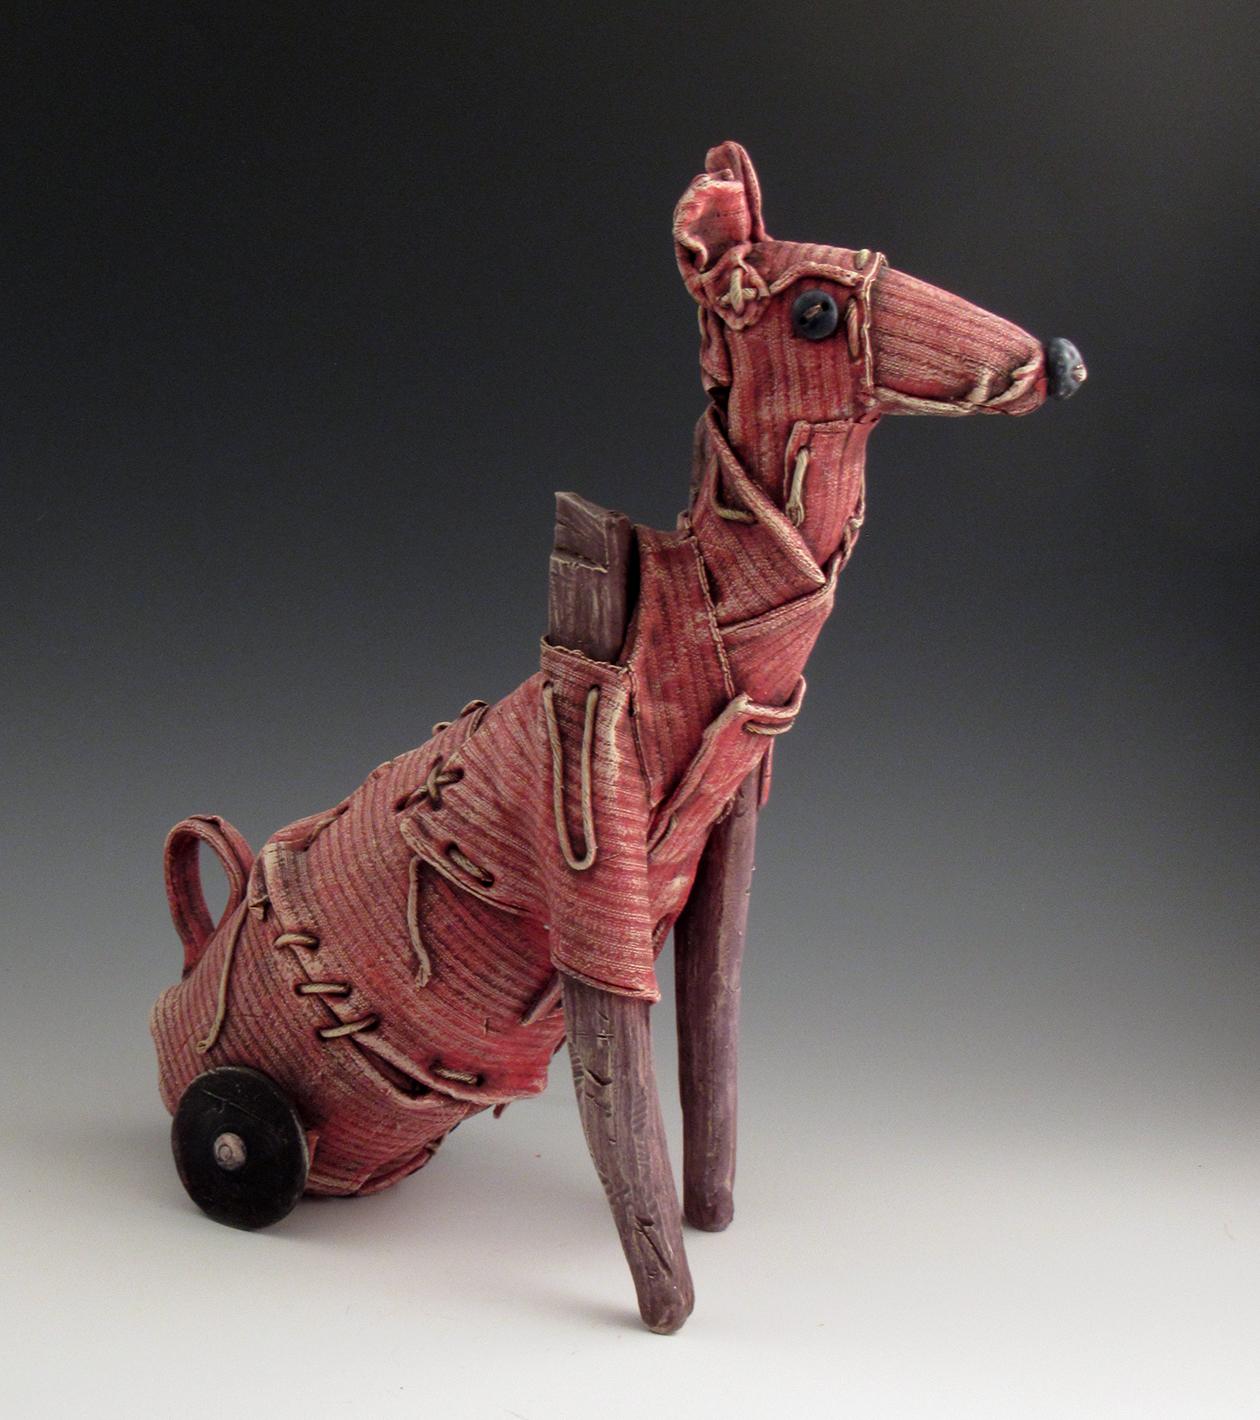 RAMONA - whimsical ceramic sculpture of an animal